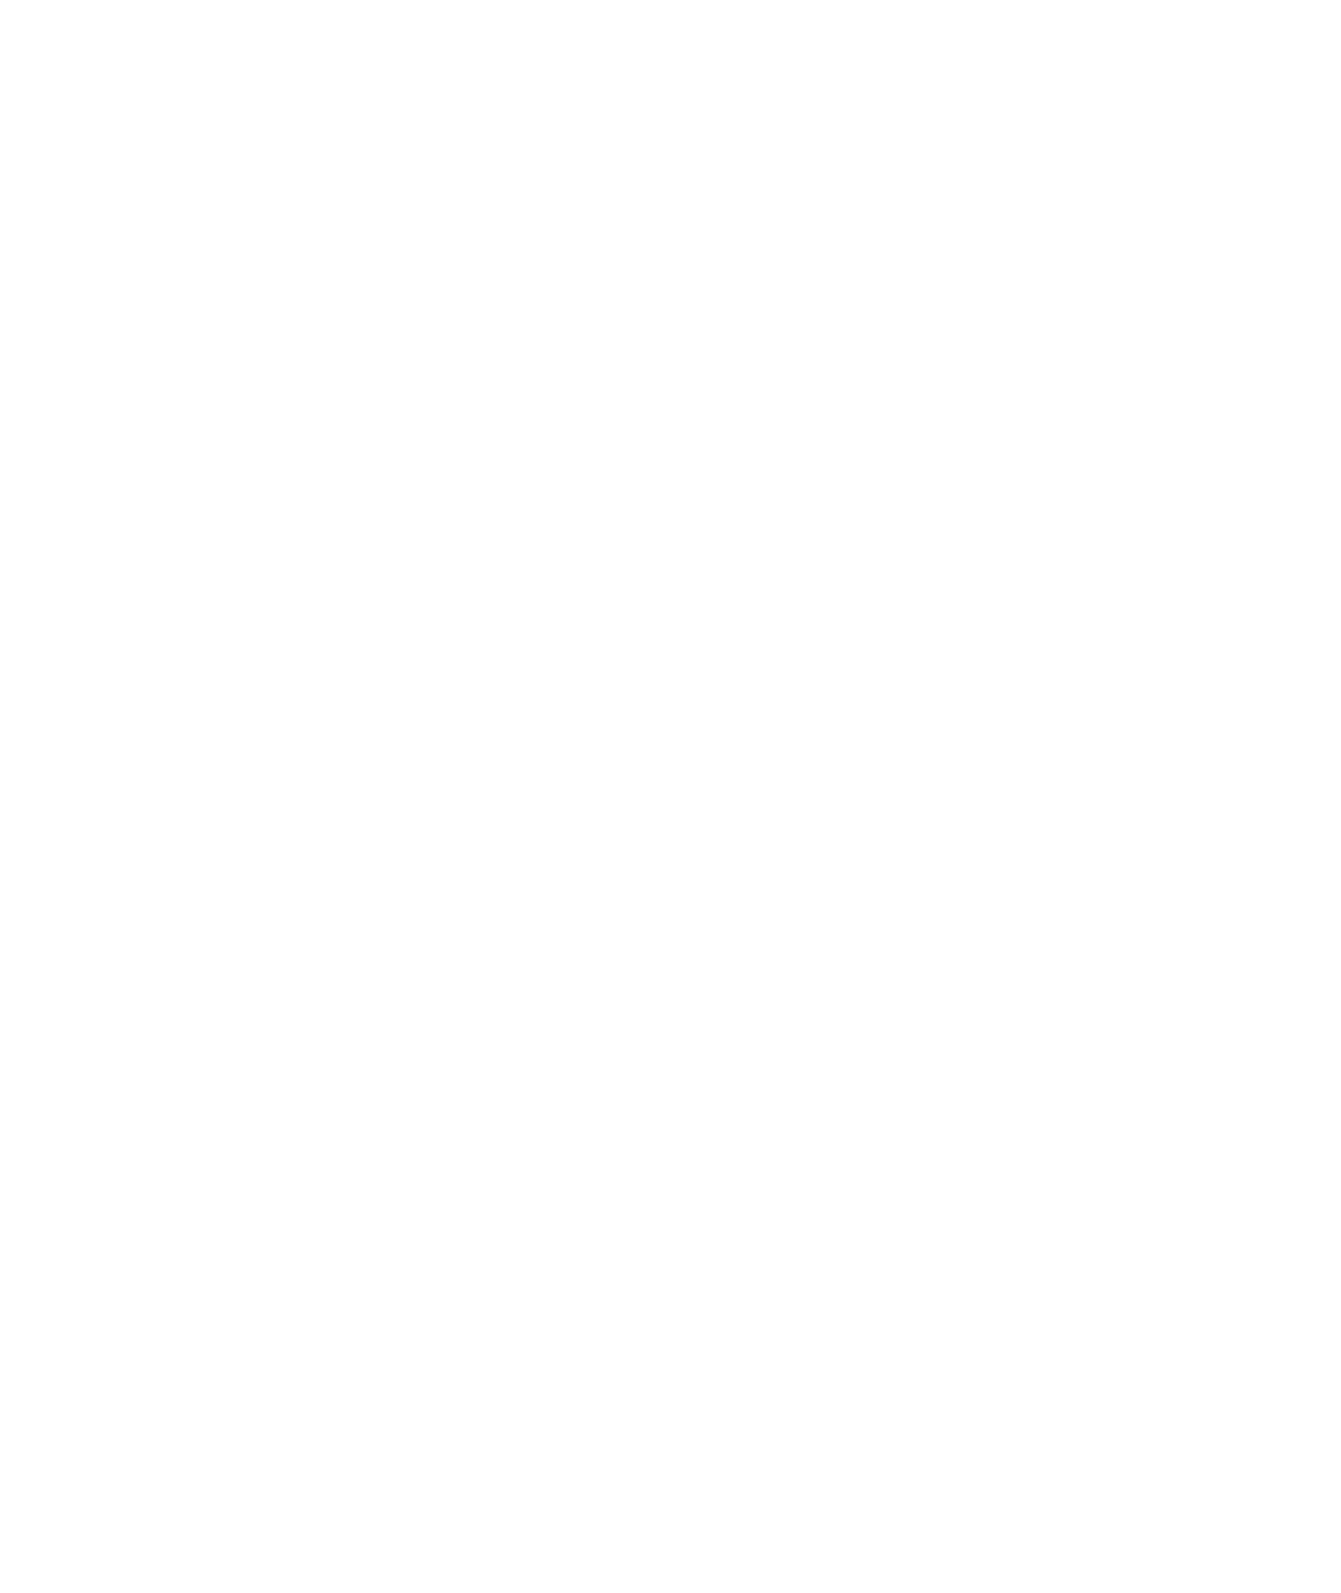 Bumrungrad Hospital logo for dark backgrounds (transparent PNG)